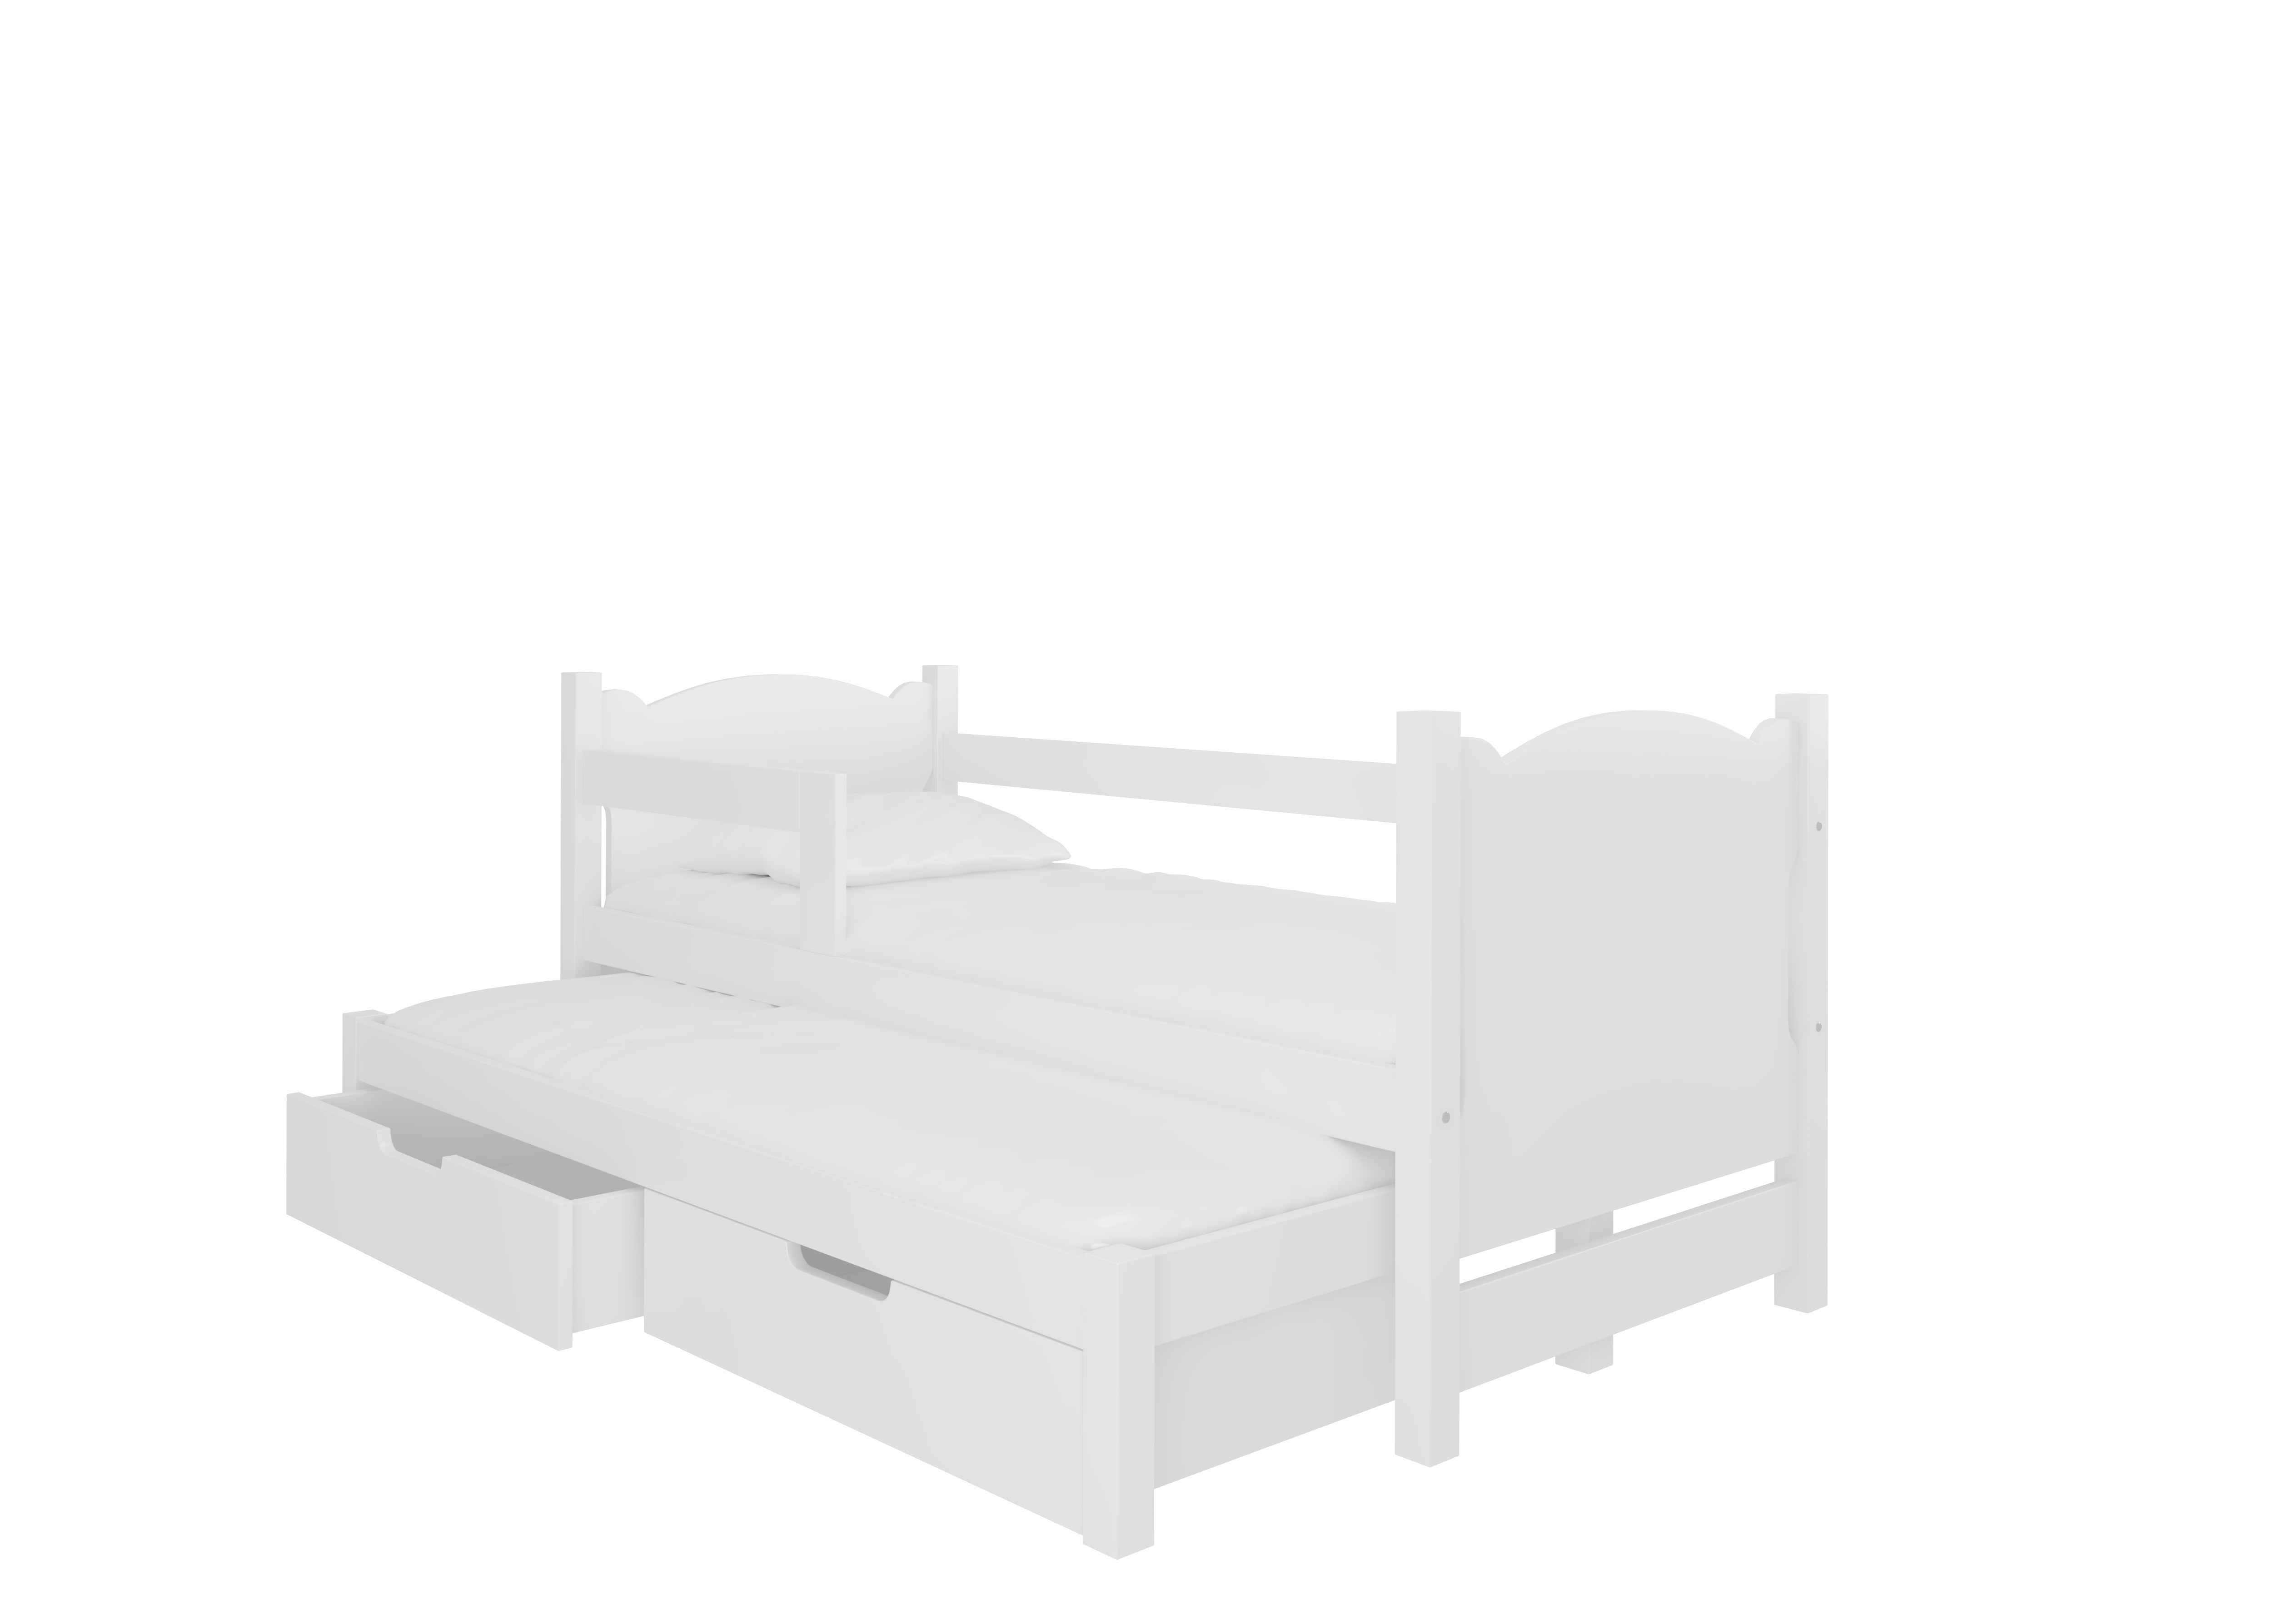 Dětská postel Campos s přistýlkou Rám: Bílá, Čela a šuplíky: Bílá - Bílá,Bílá